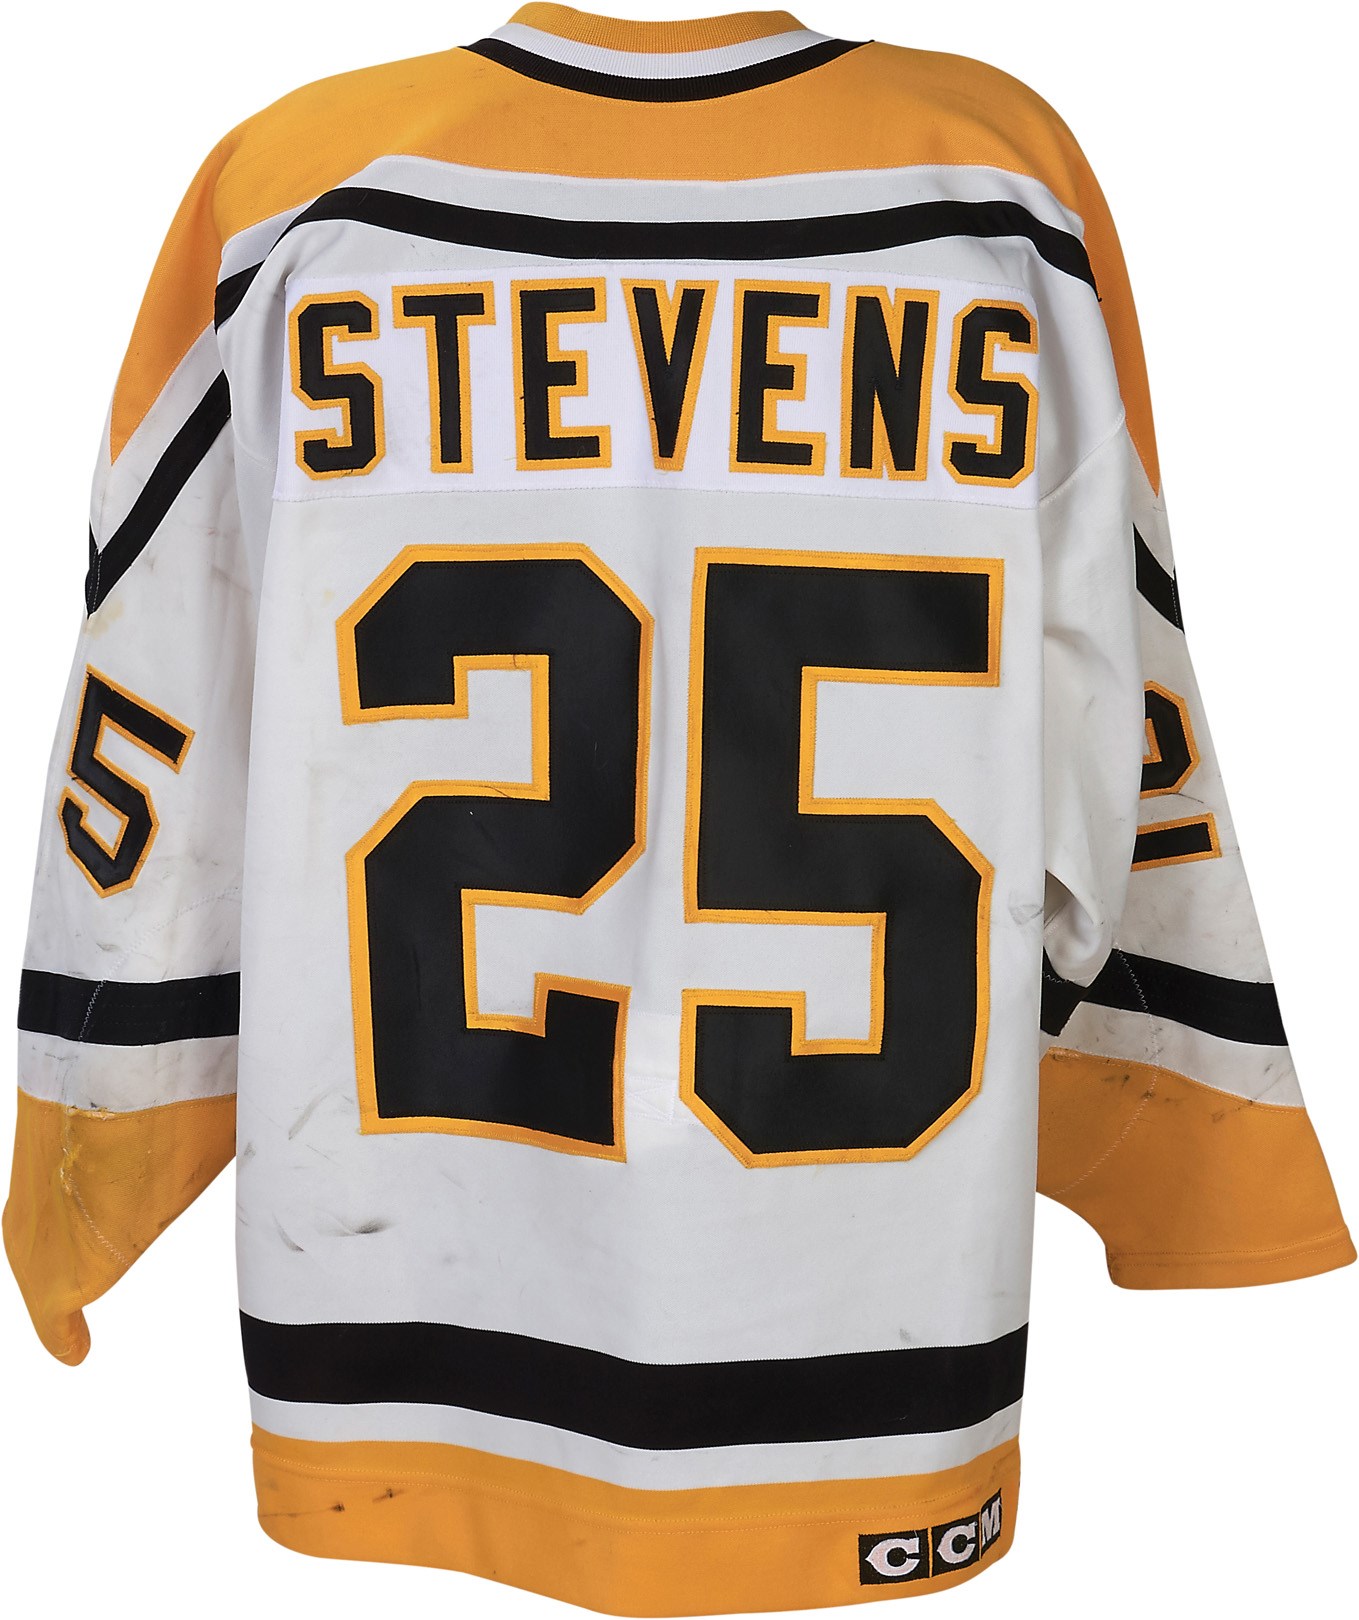 Hockey - 1993-94 Kevin Stevens Pittaburgh Penguins Game Worn Jersey